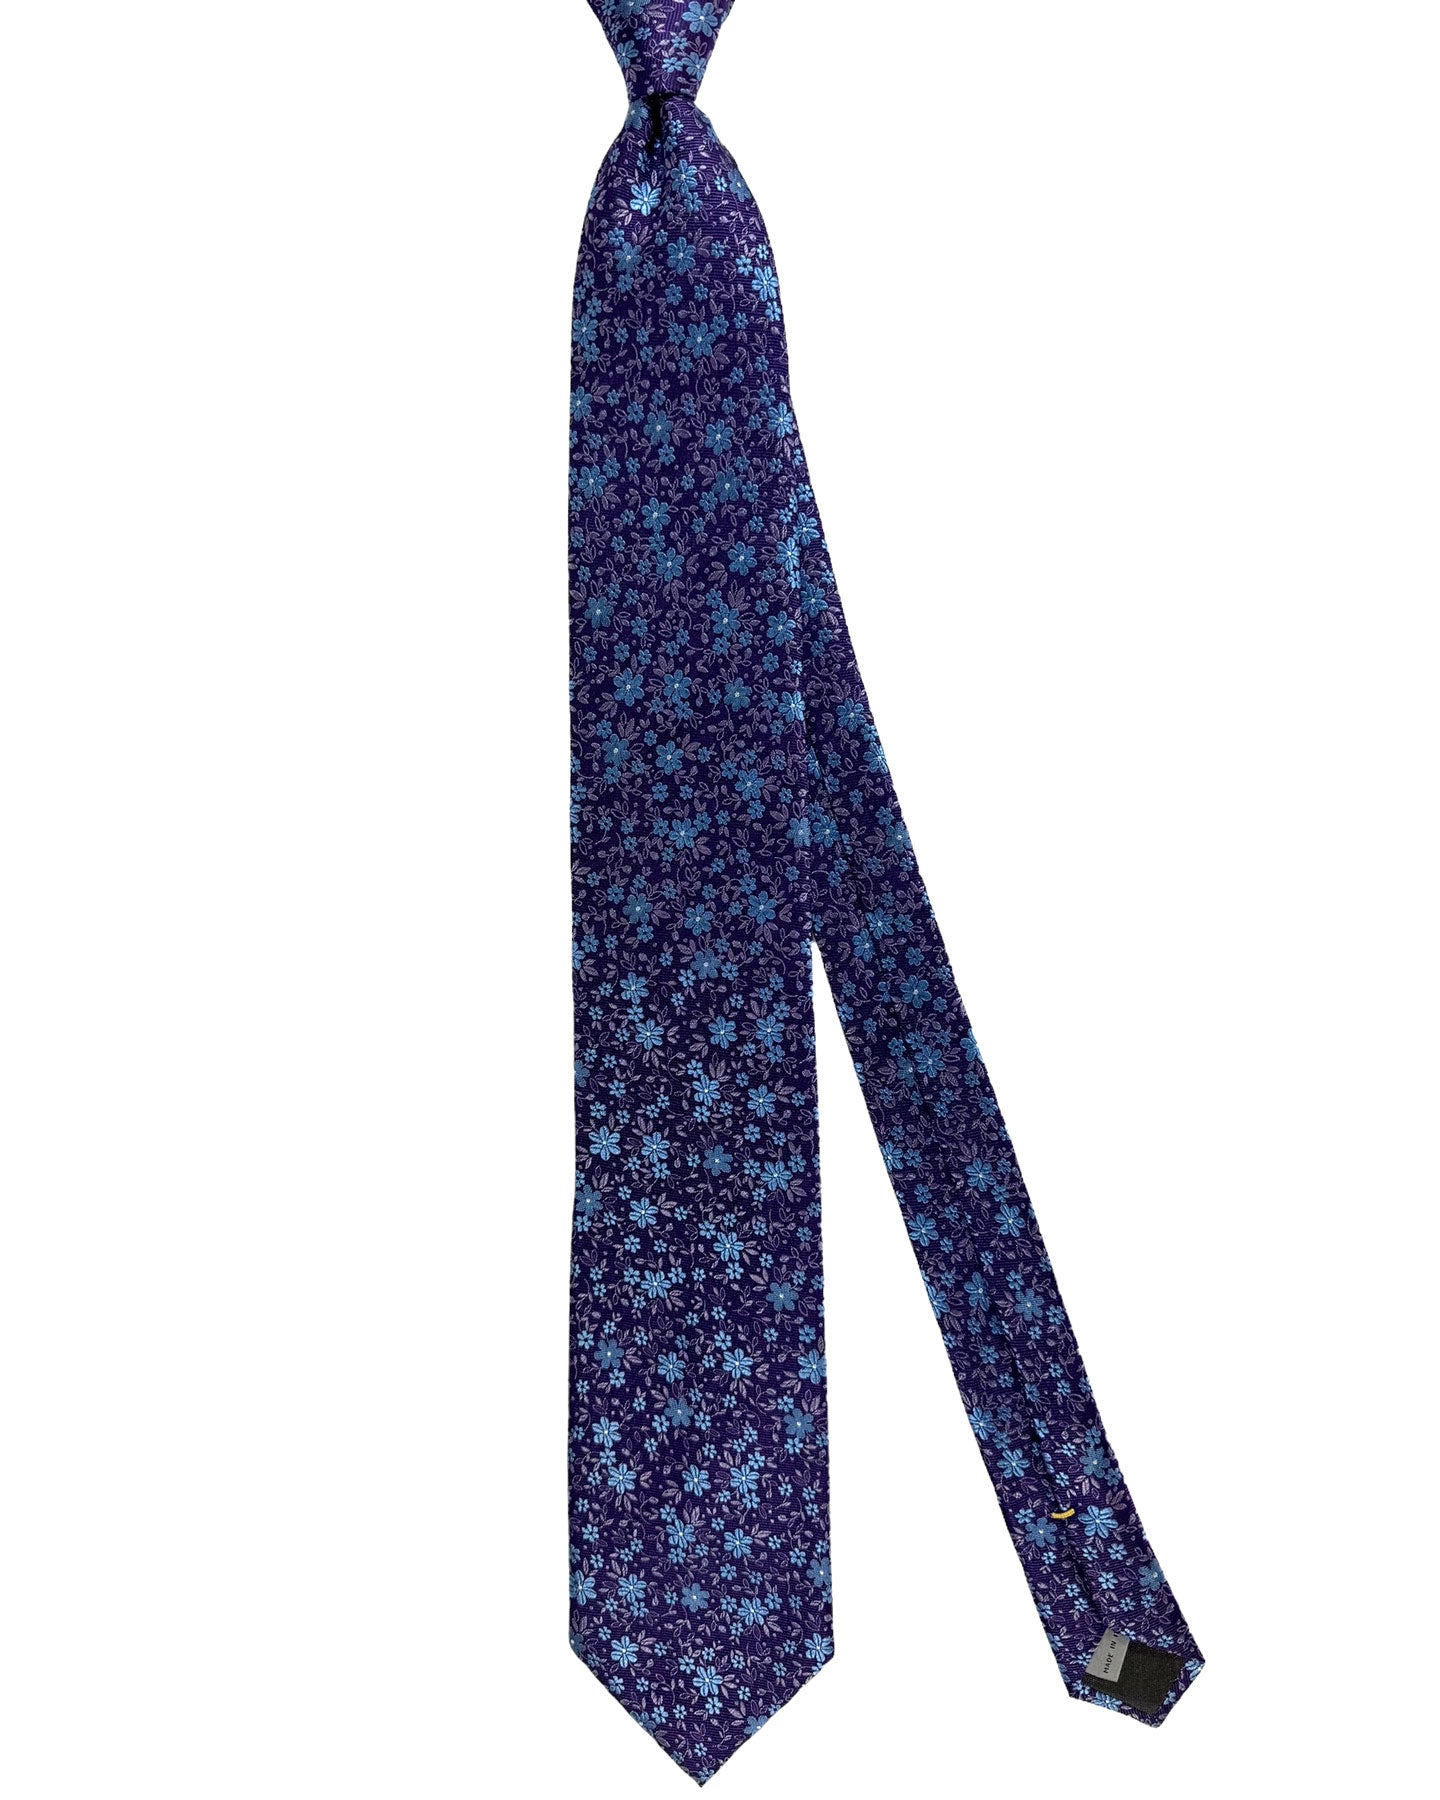 Canali Silk Tie Purple Blue Floral Pattern - Classic Italian